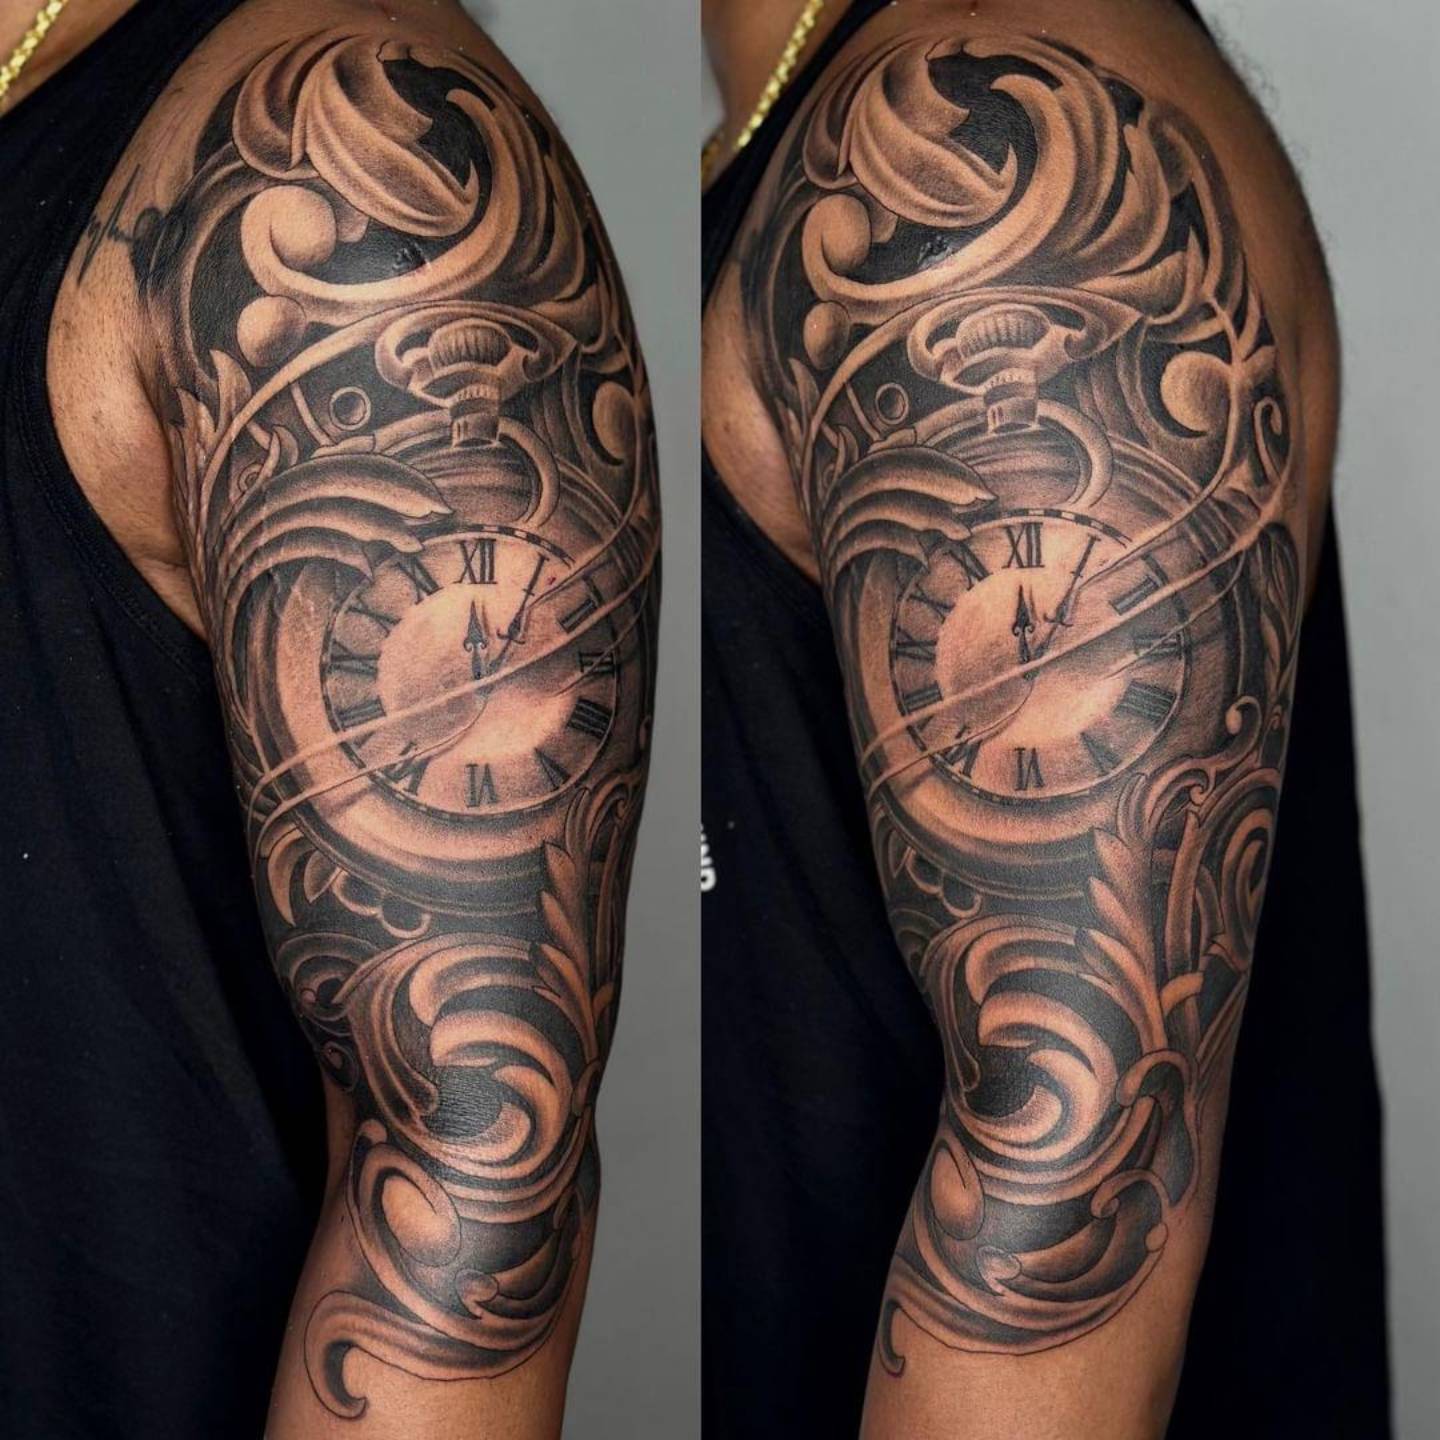 banko-tattoo-gallery-image